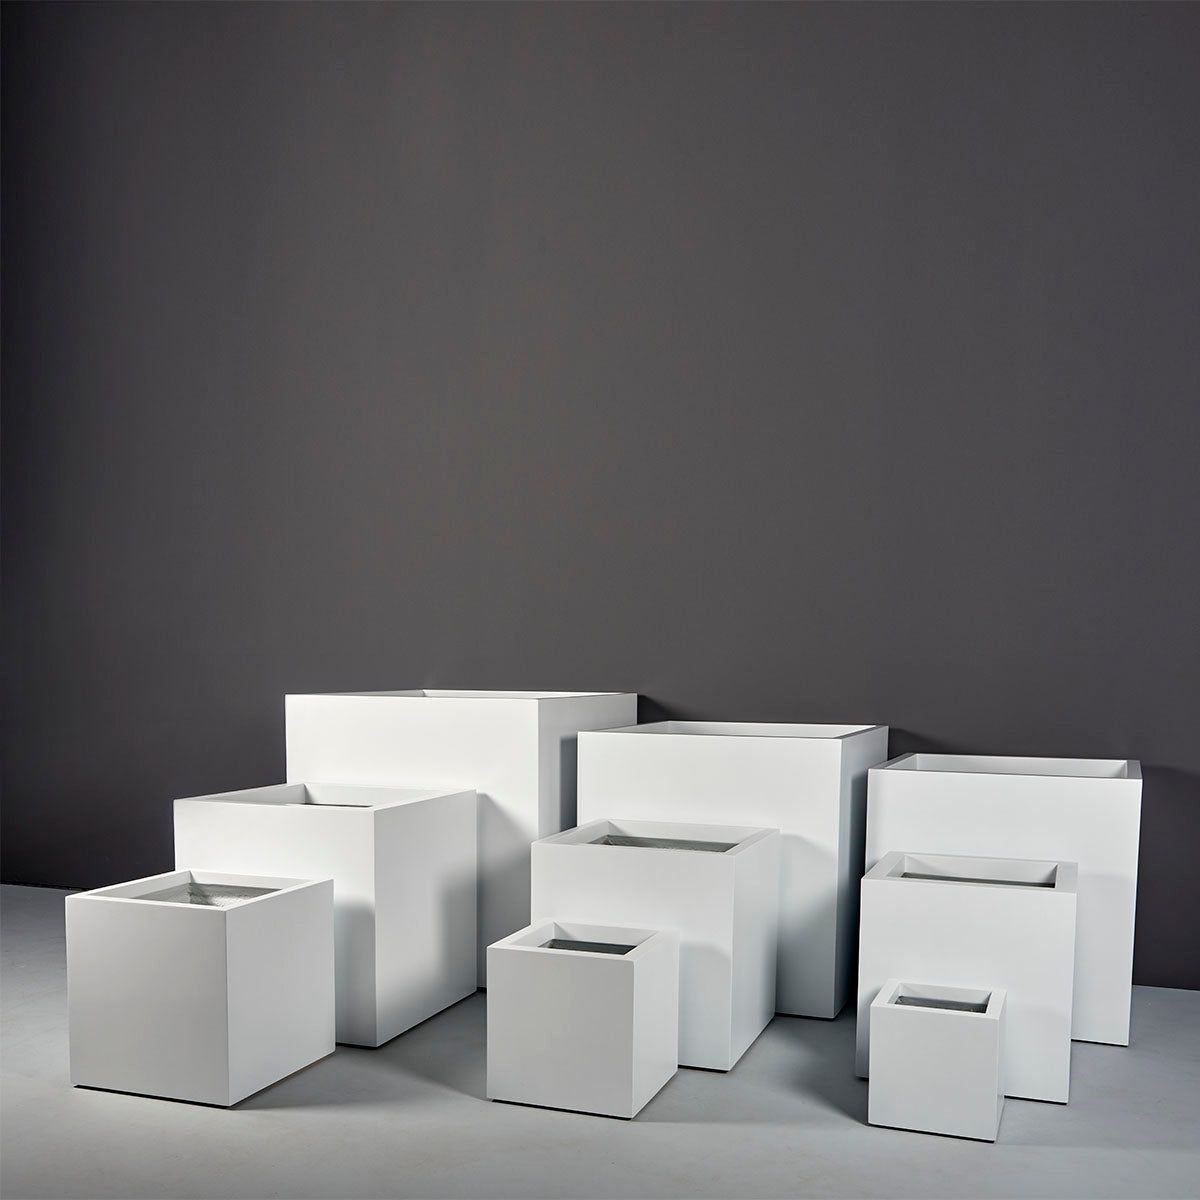 Jay Scotts Montroy Cube Fiberglass Square Planter Box - Size 24"L x 24"W x 24"H